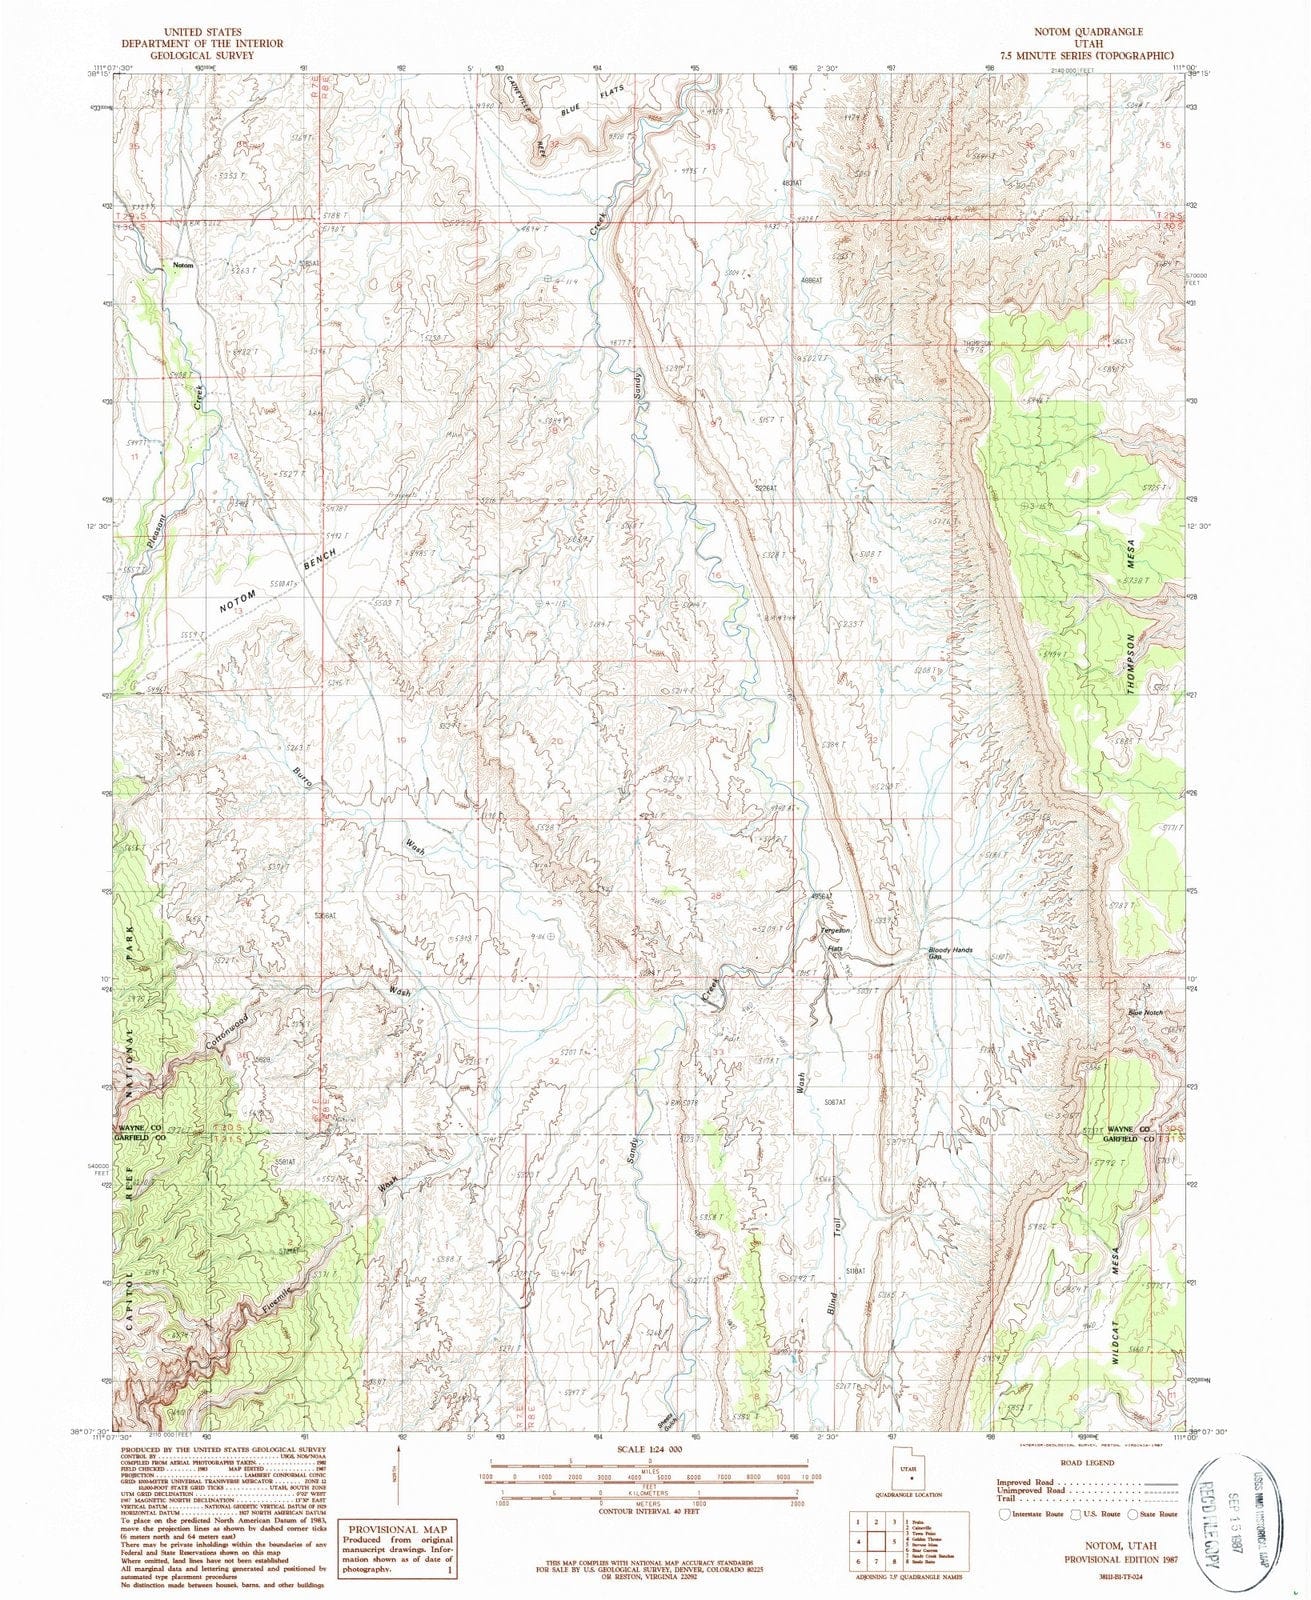 1987 Notom, UT - Utah - USGS Topographic Map